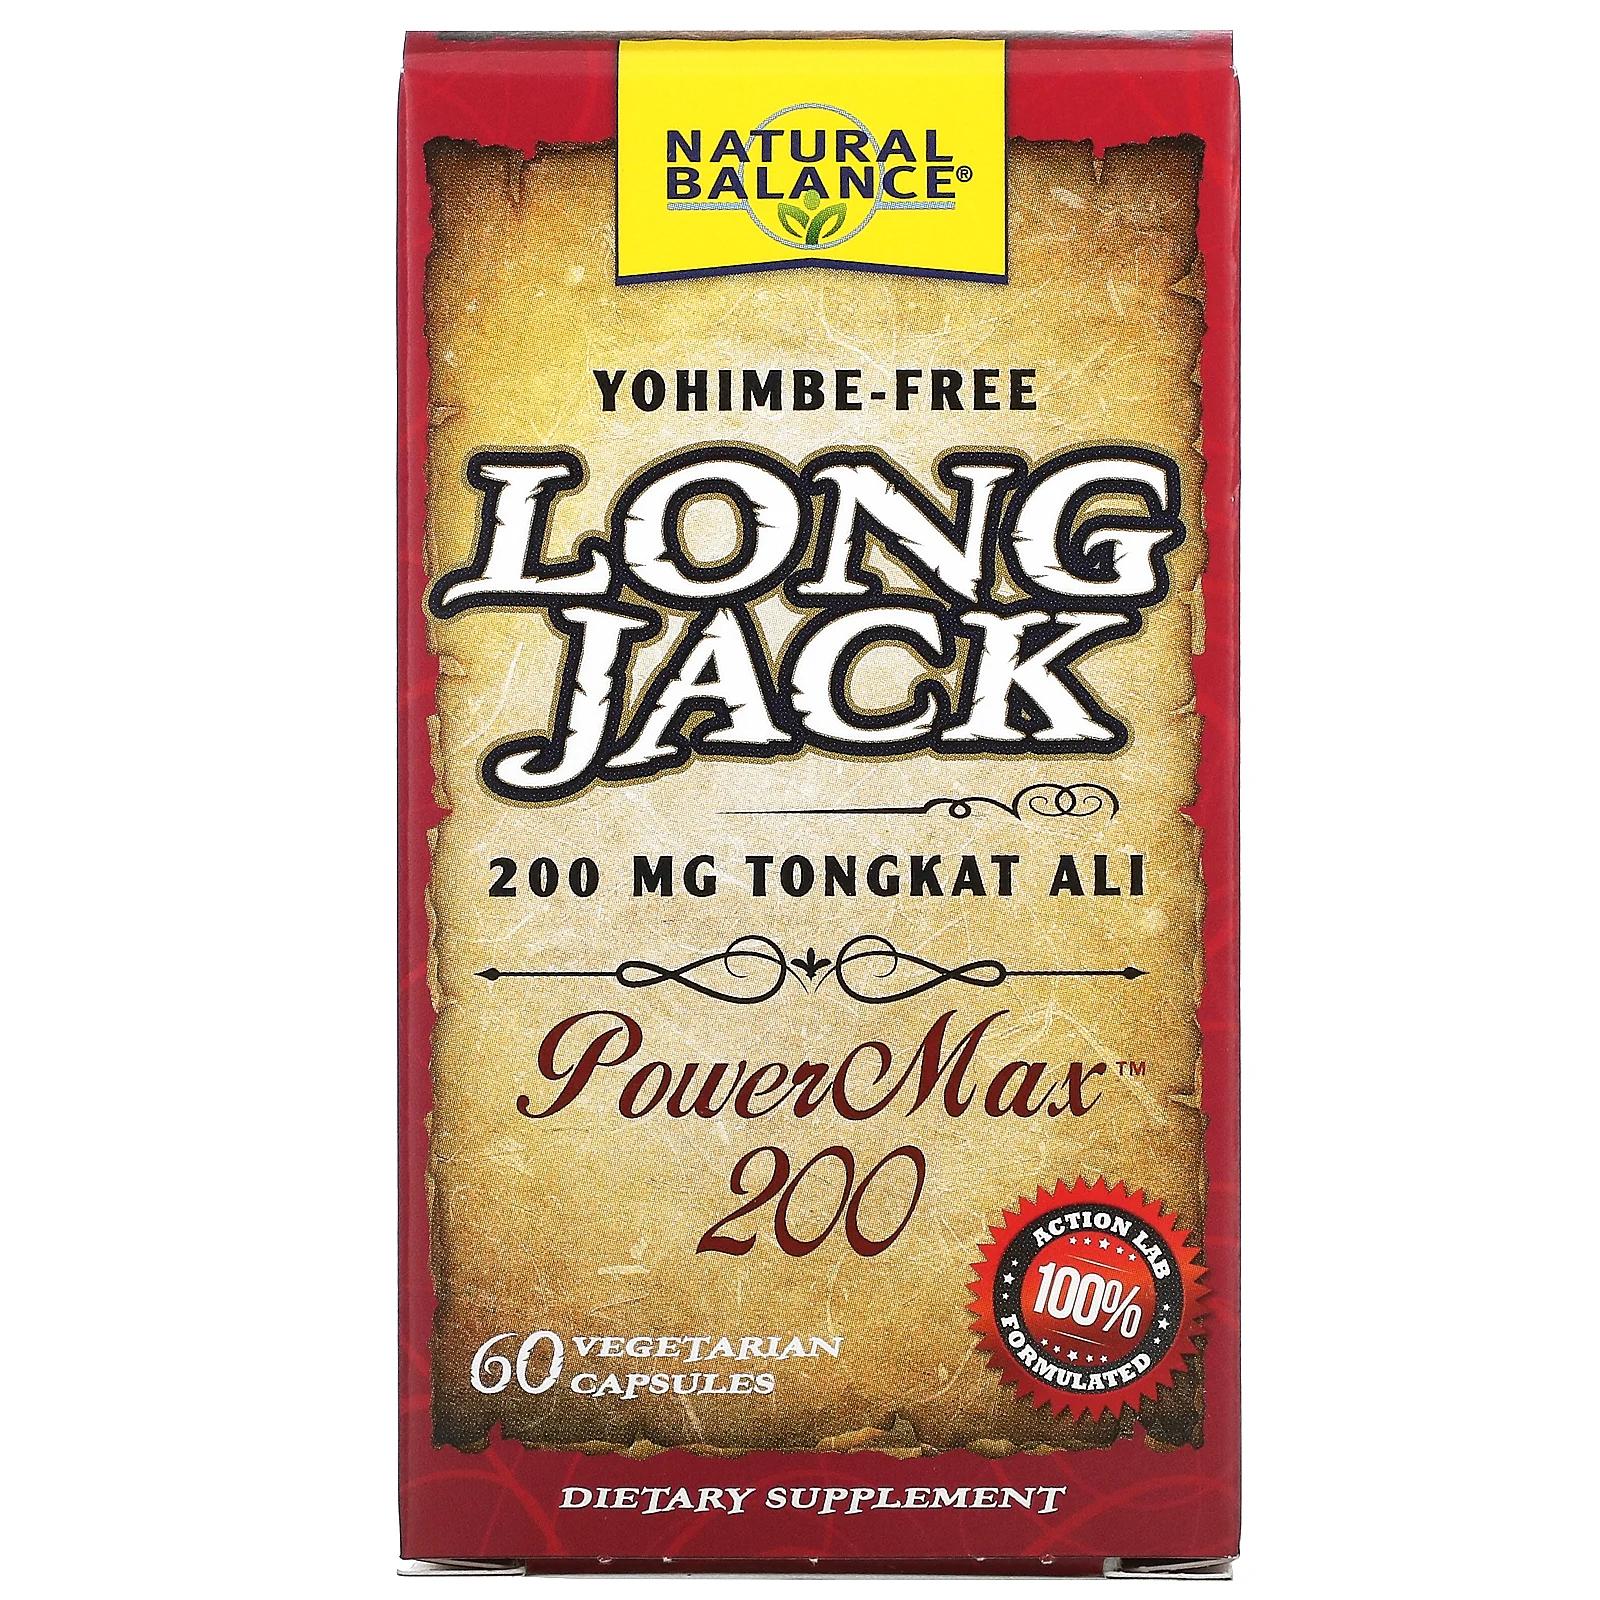 Natural Balance Long Jack PowerMax 200 60 вегетерианских капсул